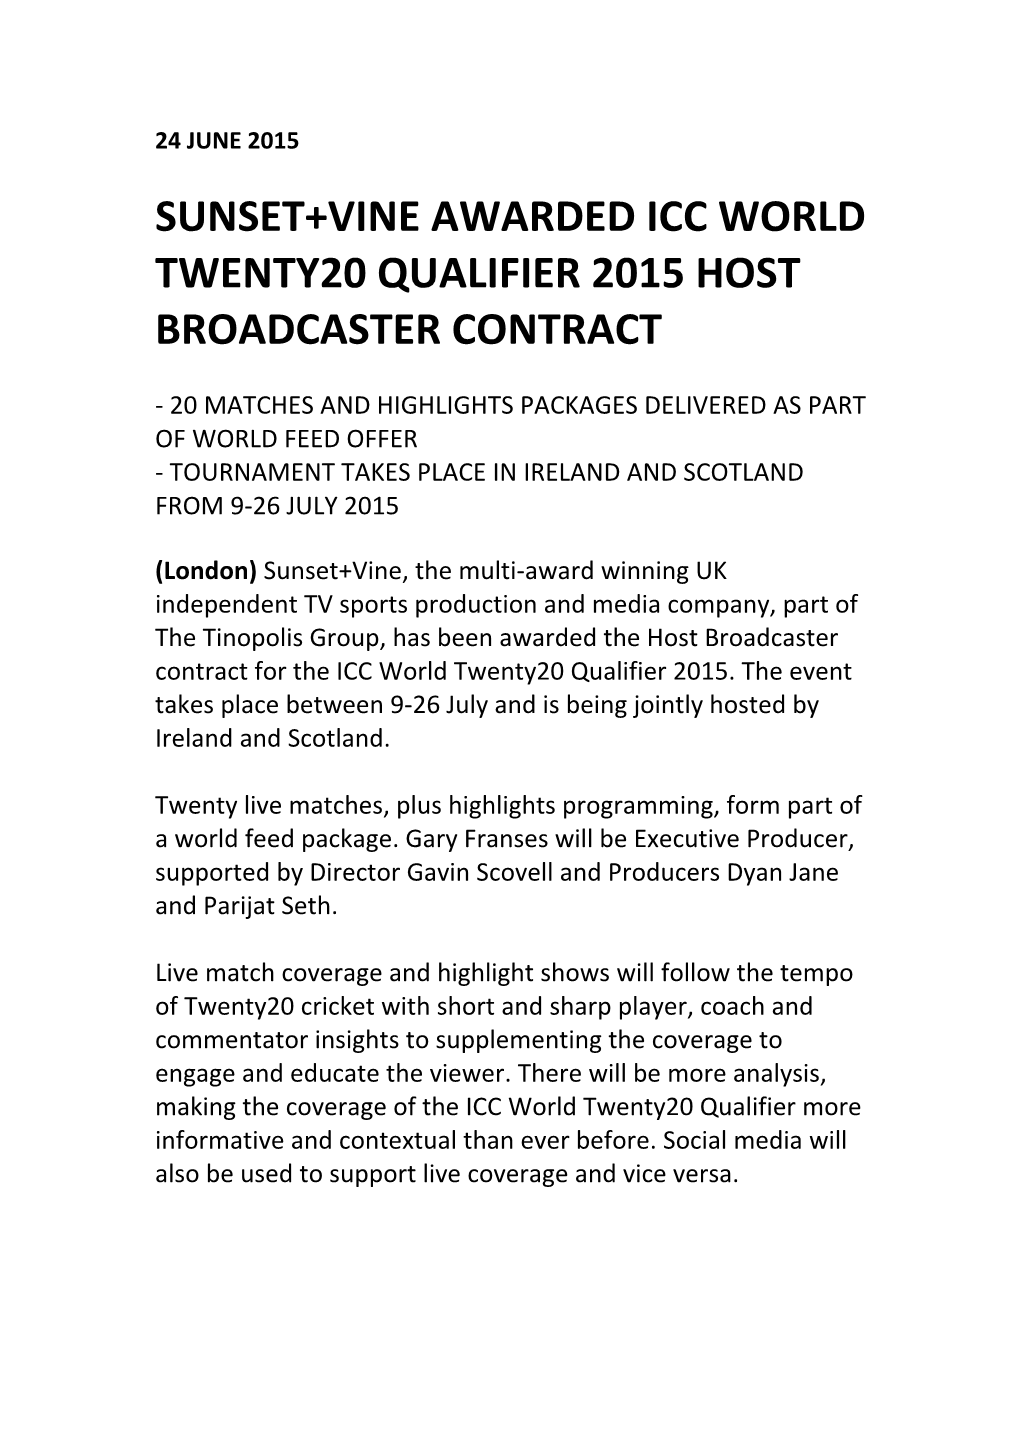 Sunset+Vineawardedicc World Twenty20 Qualifier 2015 Host Broadcaster Contract